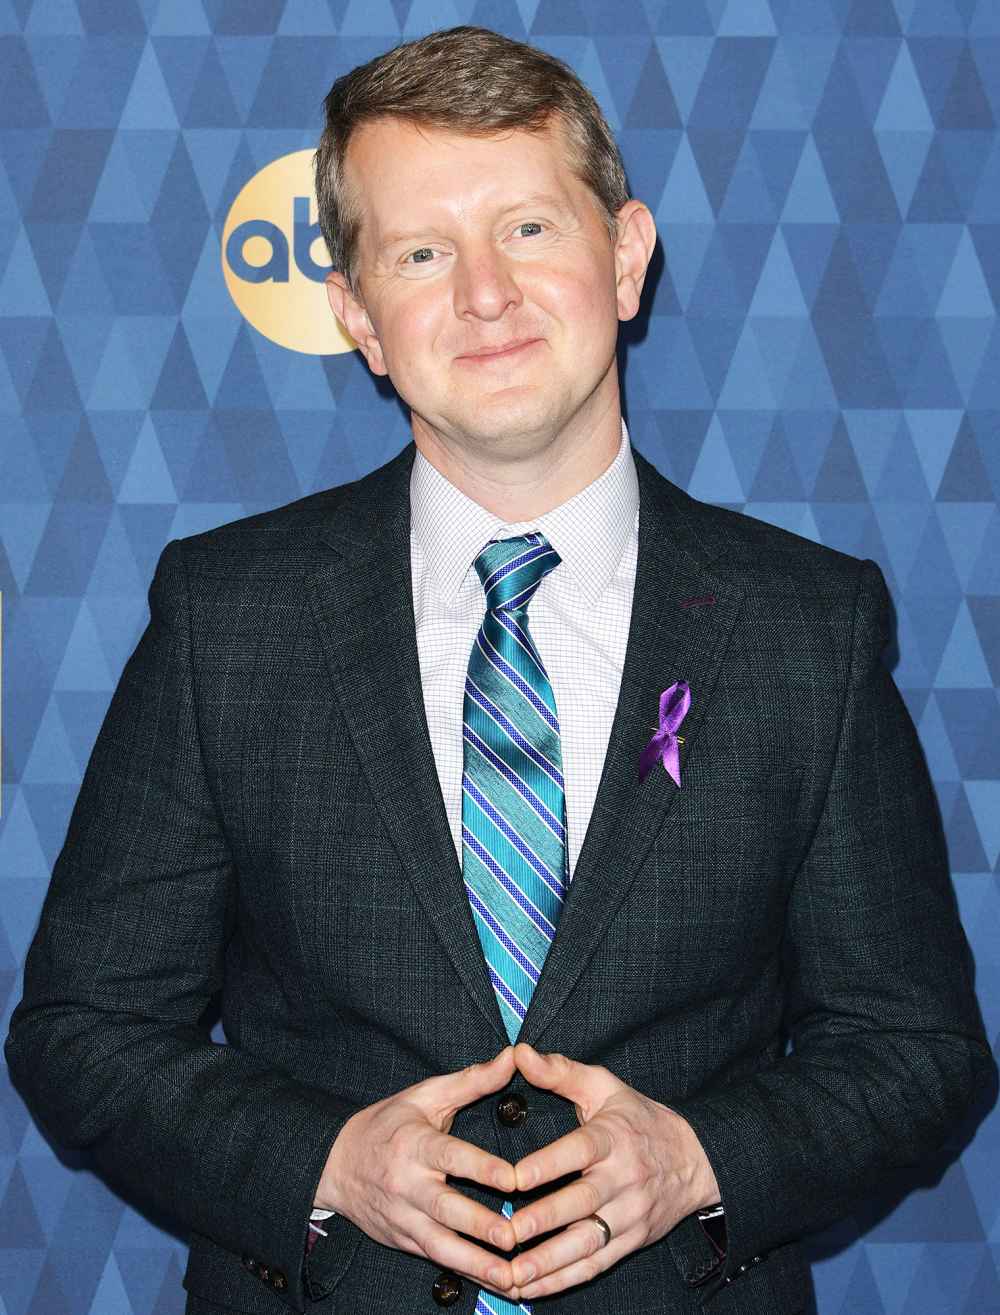 Ken Jennings attends the ABC TCA Winter Press Tour Jeopardy Winner Ken Jennings Apologizes For Insensitive Tweets